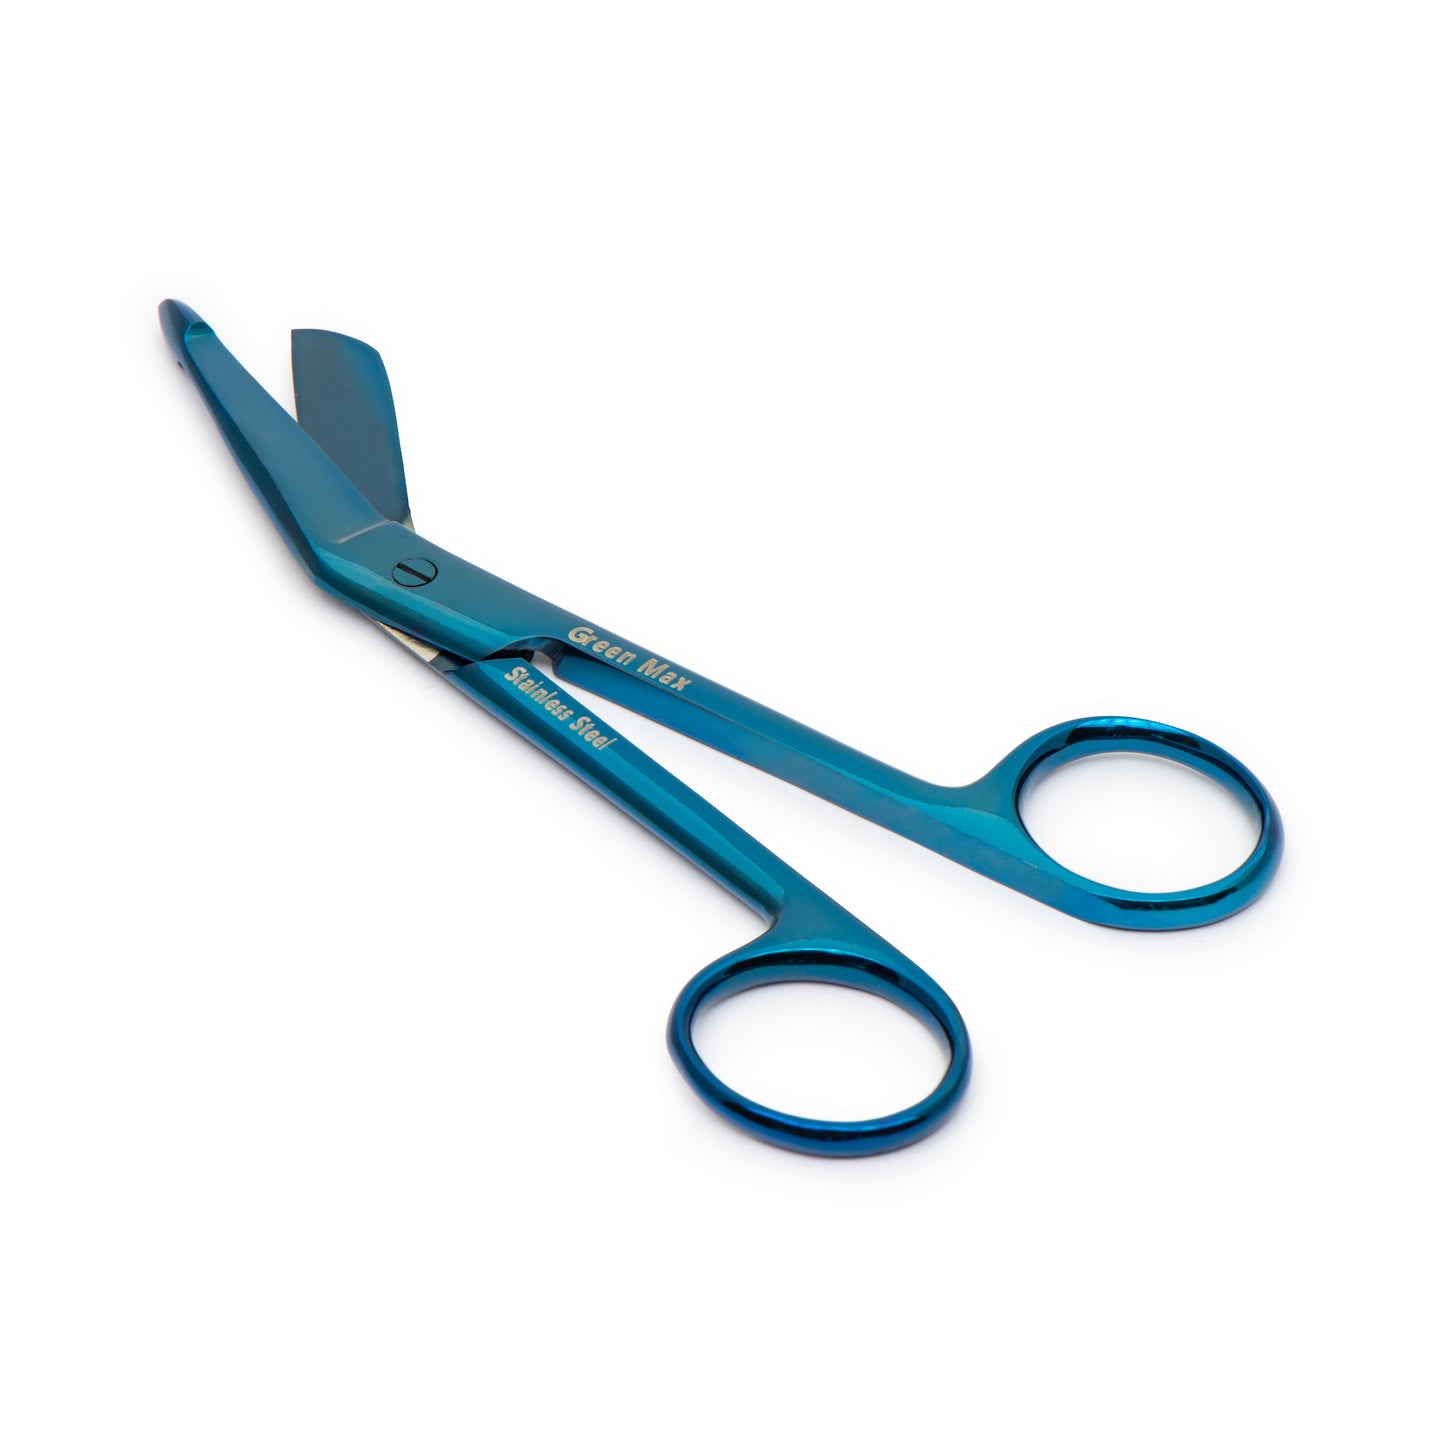 Lister Bandage Scissors, Medical and Nursing Lister Bandage Shears 6"